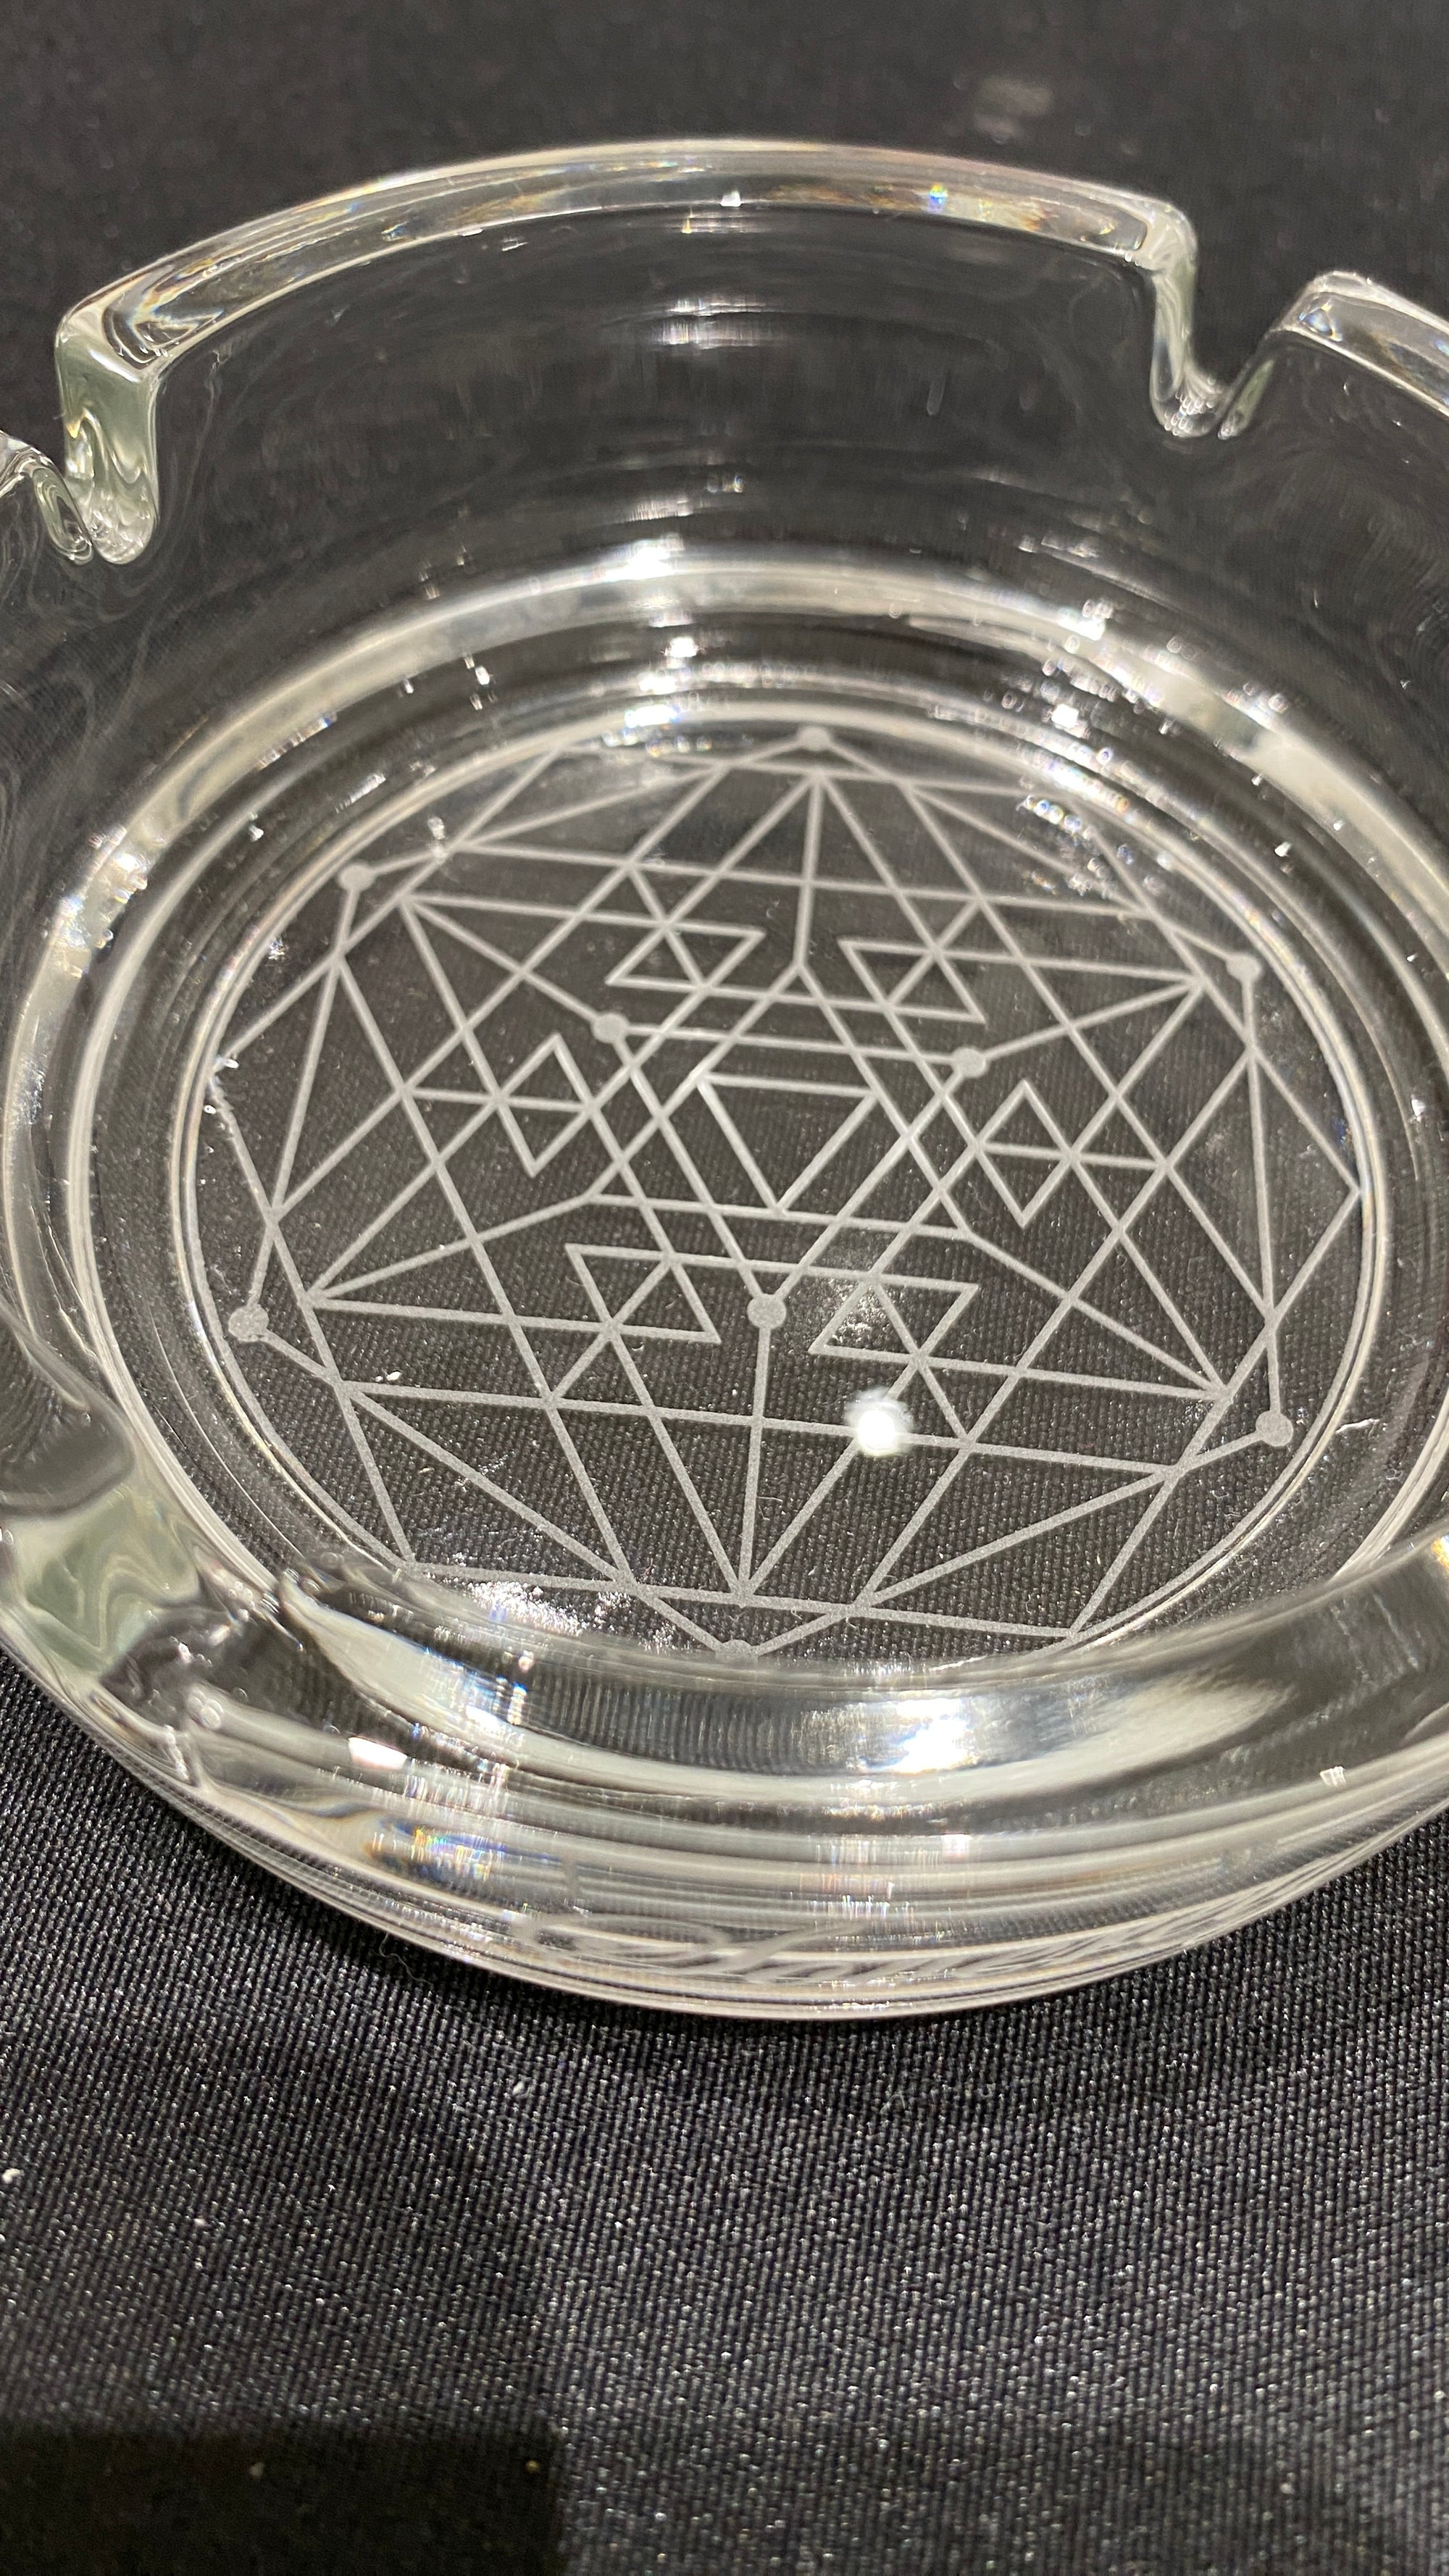 Sovereignty Glass Ash tray - pattern